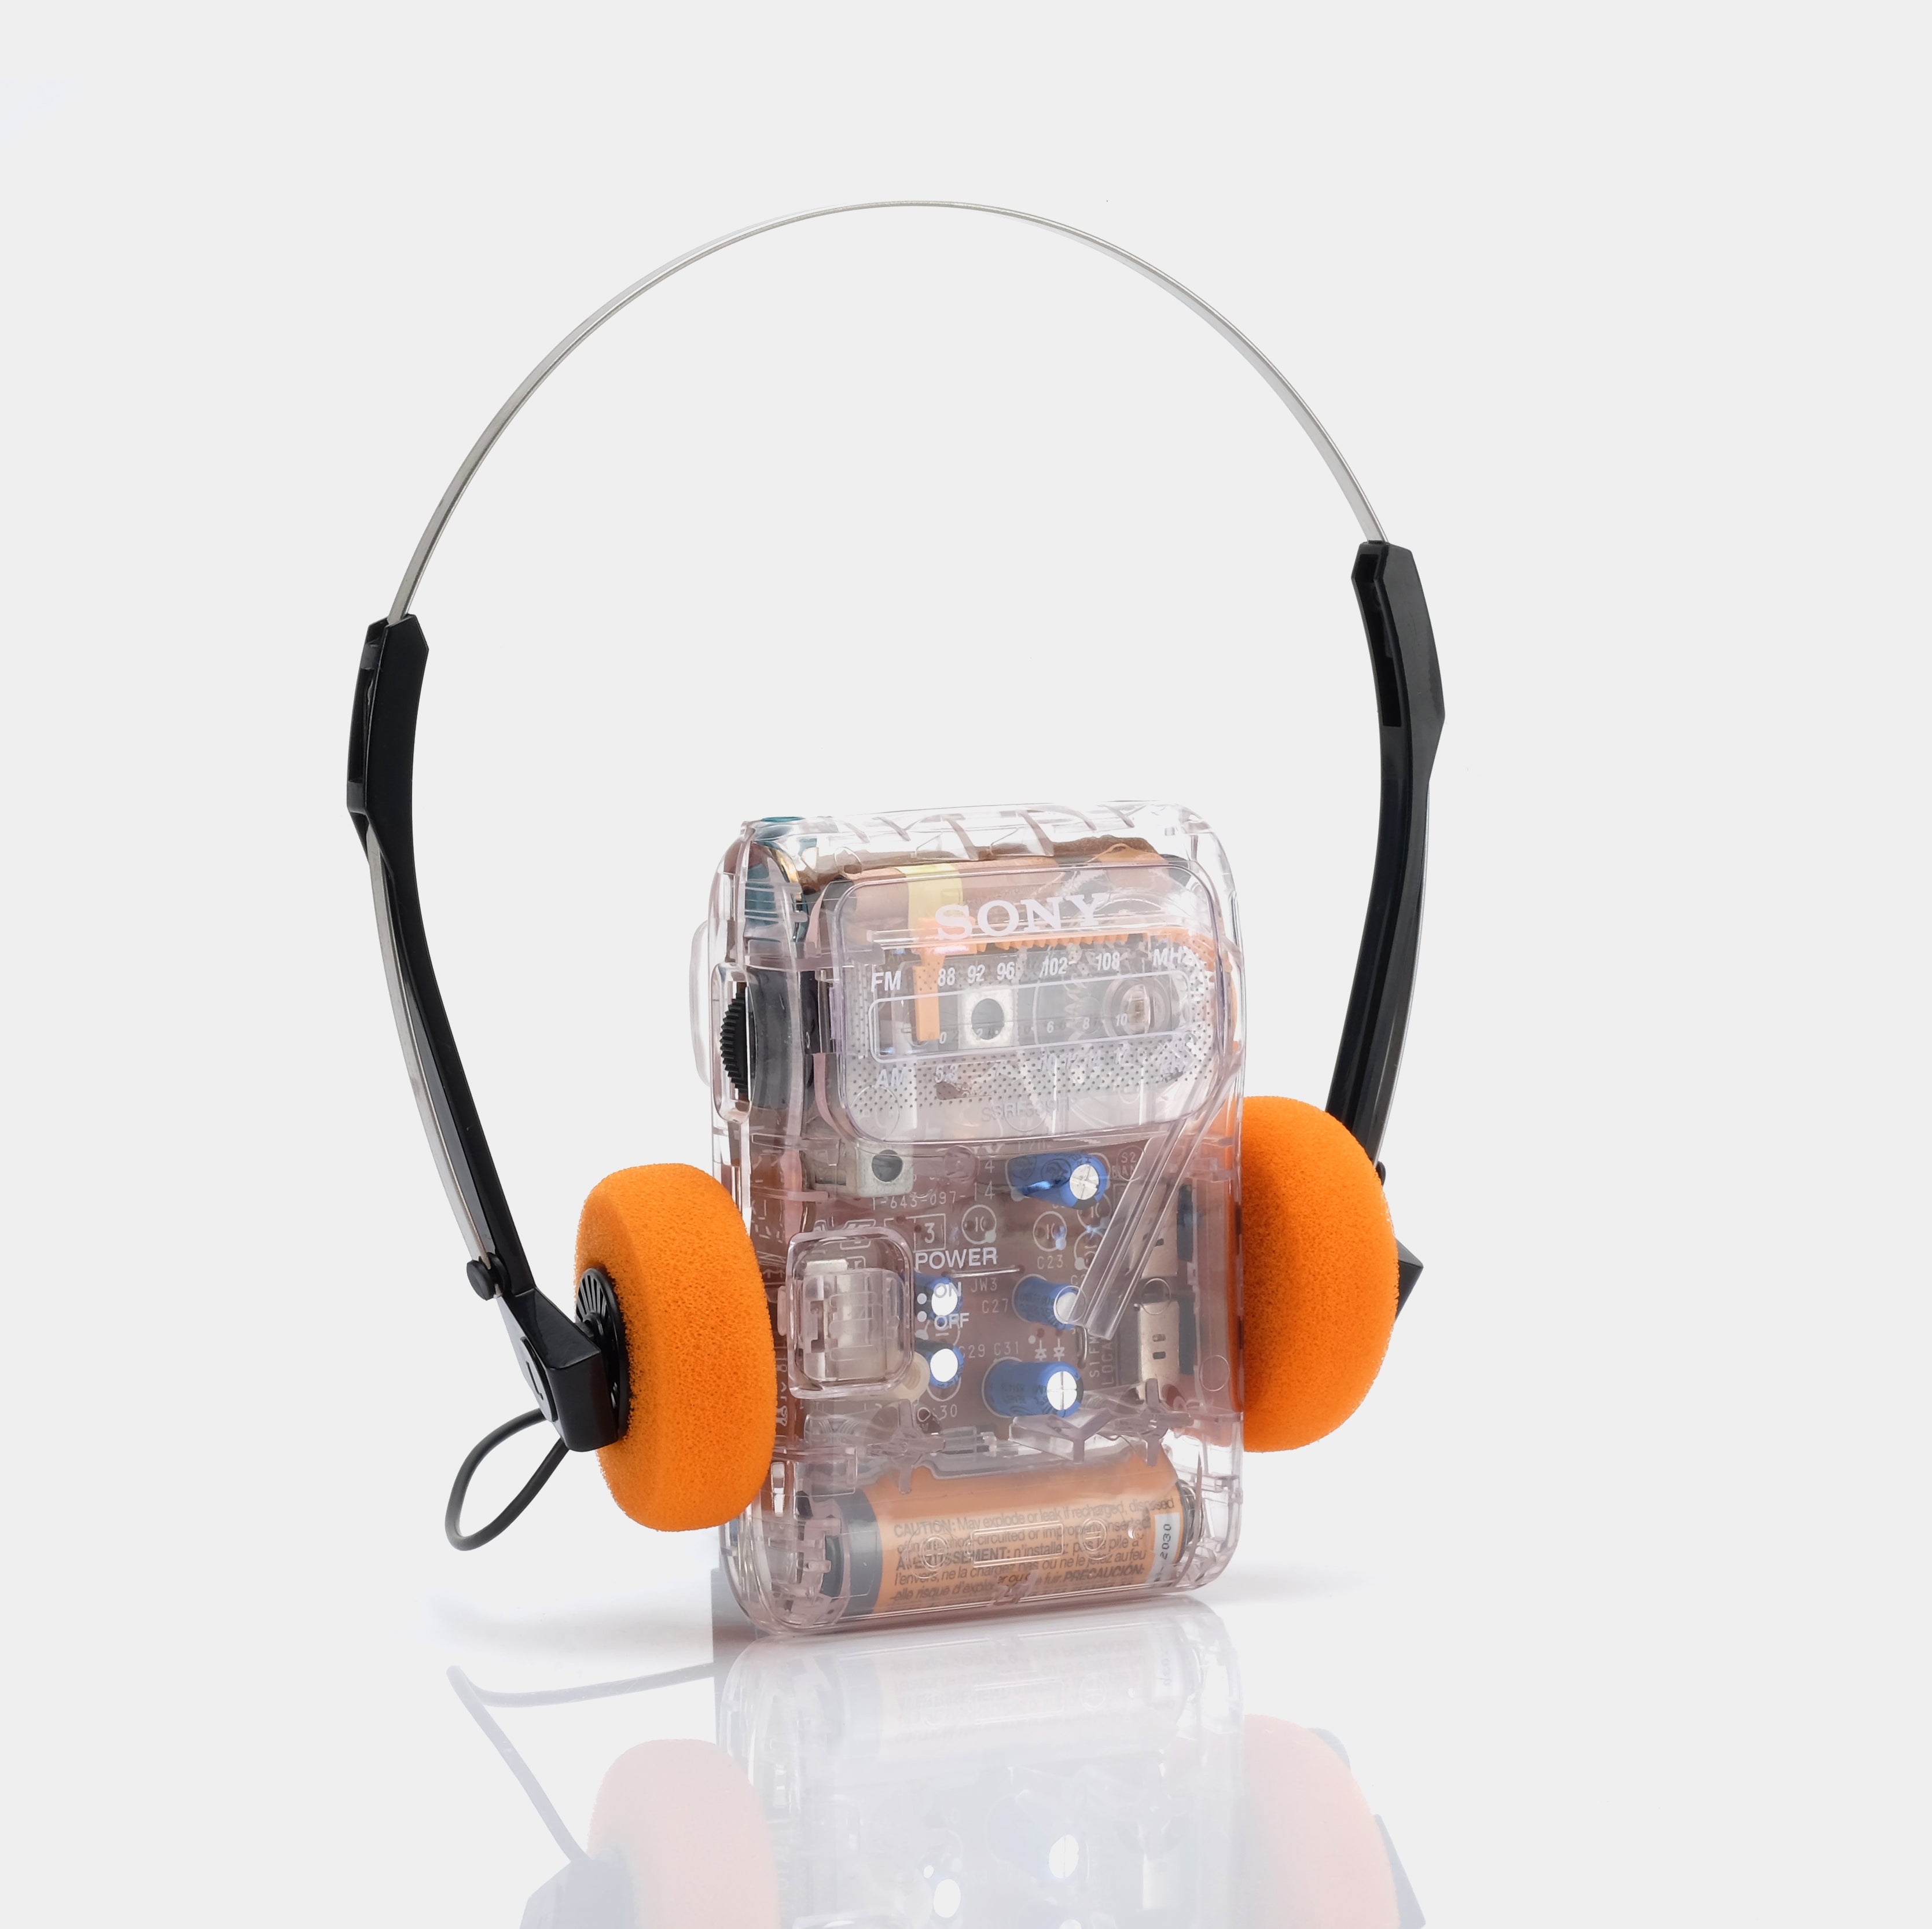 Sony Walkman Clear Transparent AM/FM Portable Prison Radio